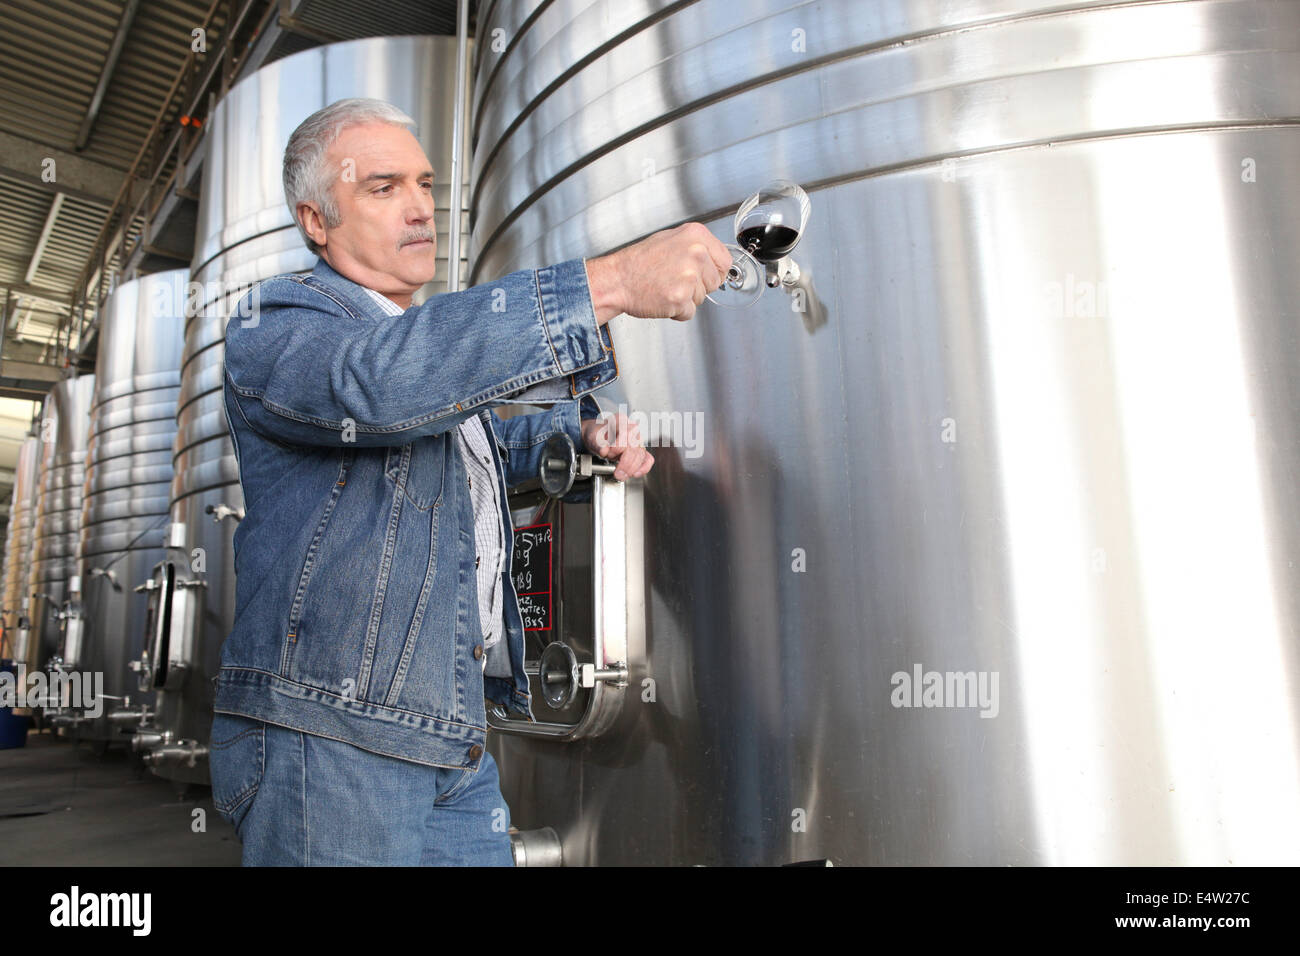 Wine producer stood by tanks Stock Photo